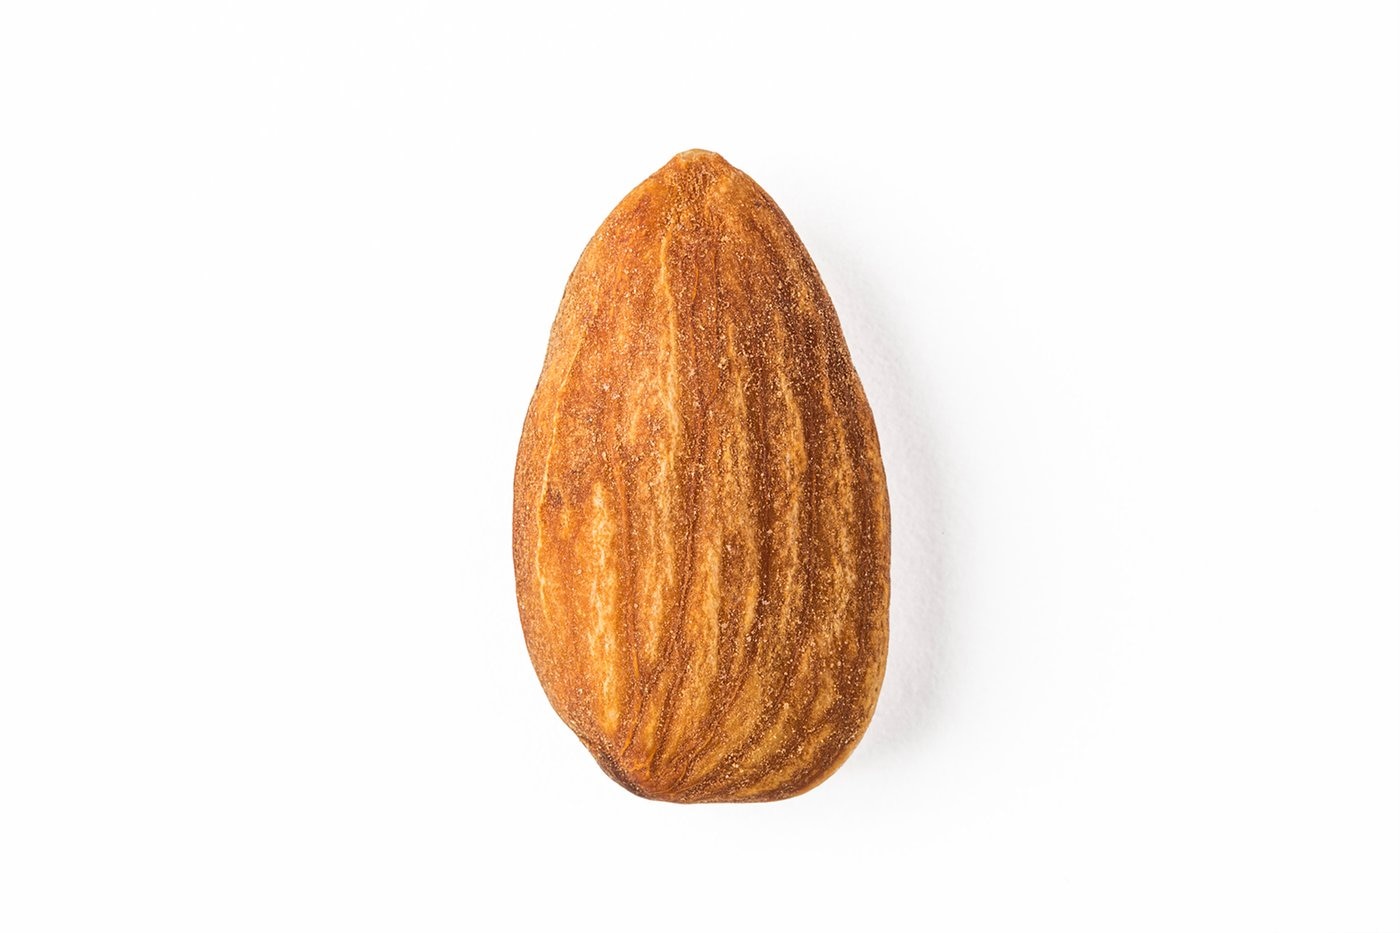 Roasted Almonds (50% Less Salt) photo